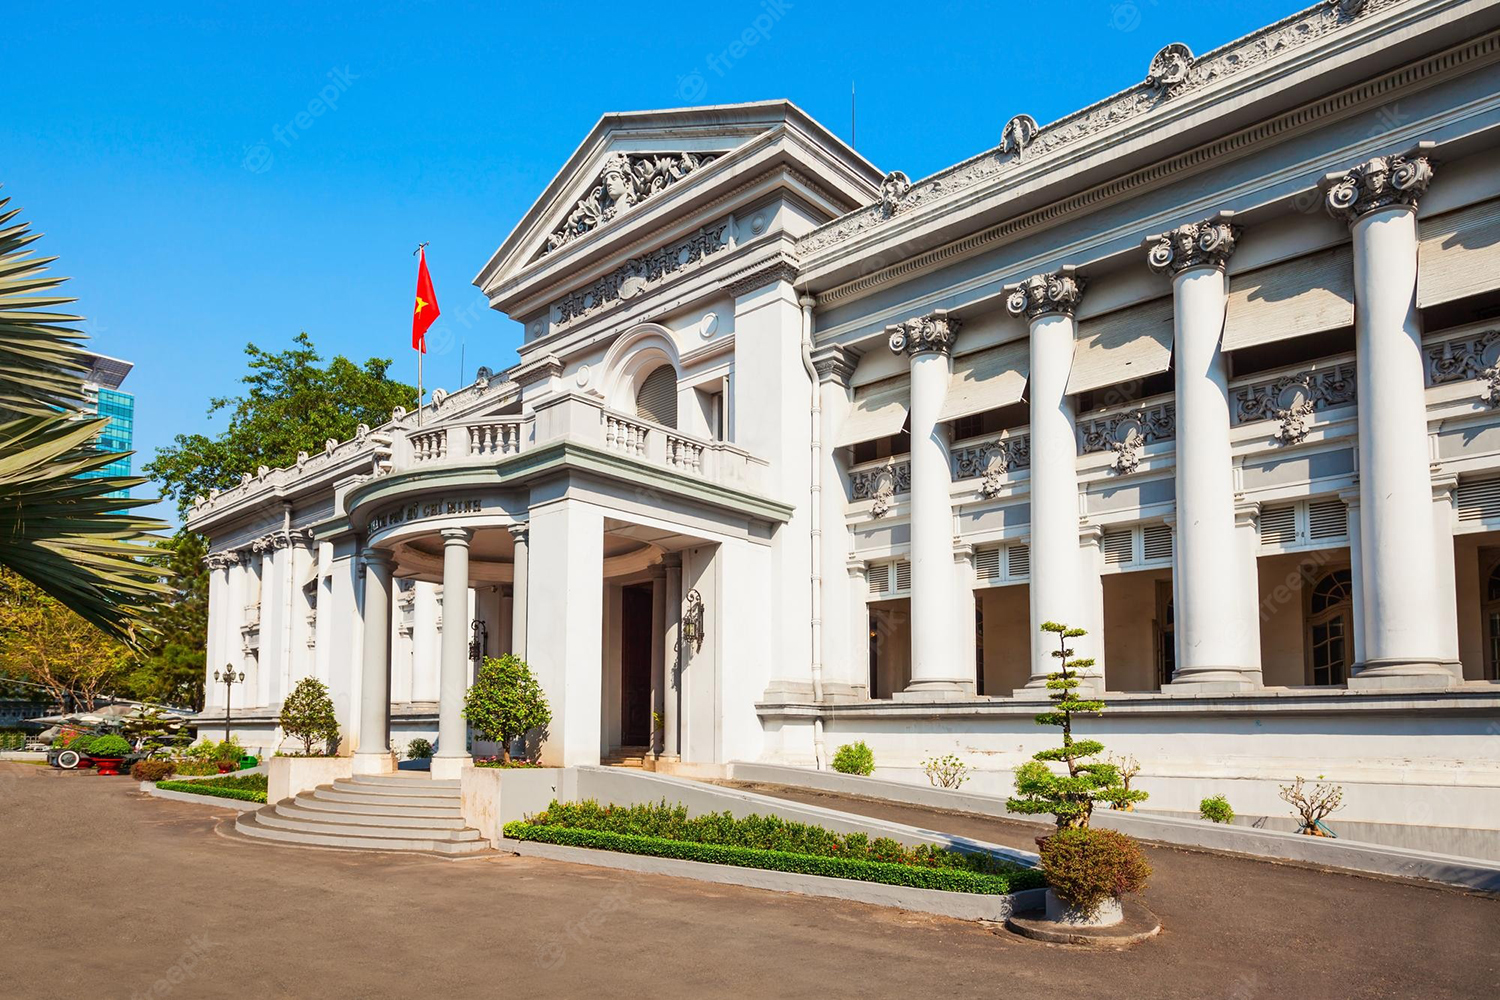 Cosa visitare a Ho Chi Minh: il Museo Rivoluzionario o Gia Long palace